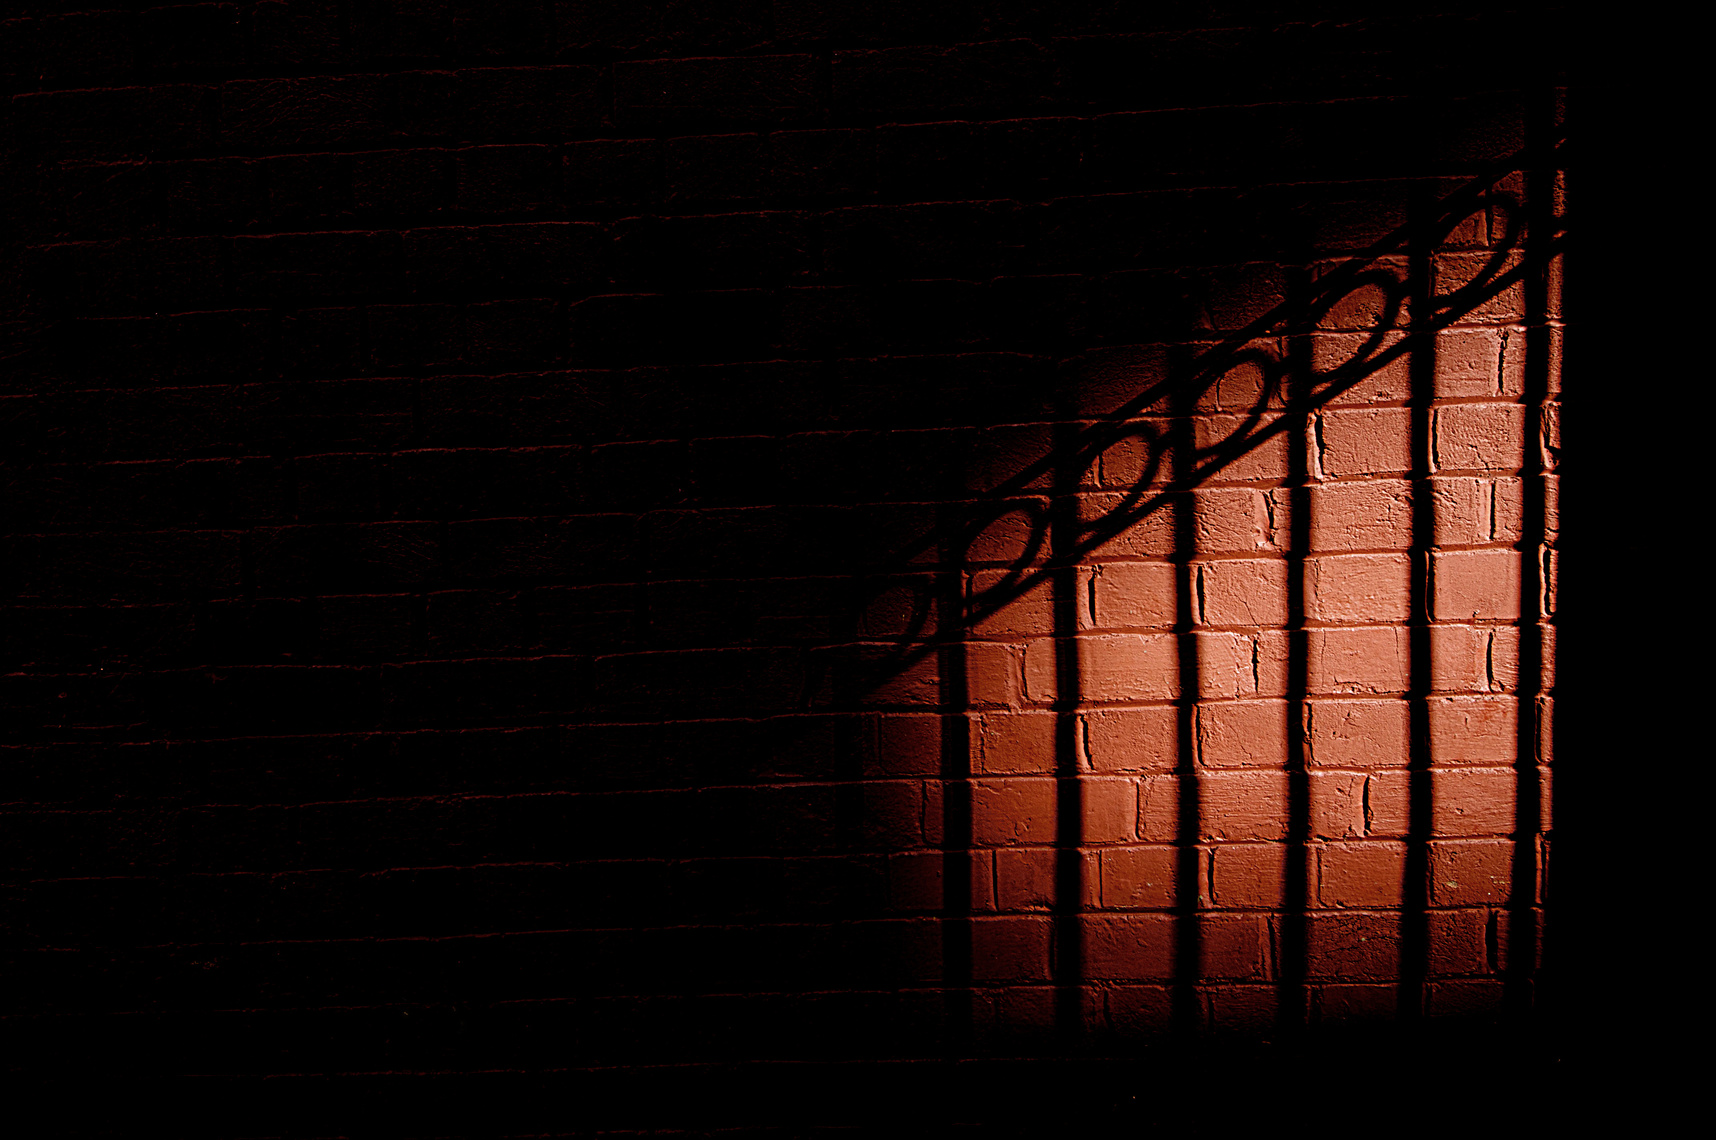 Shadows on Red Brick Wall